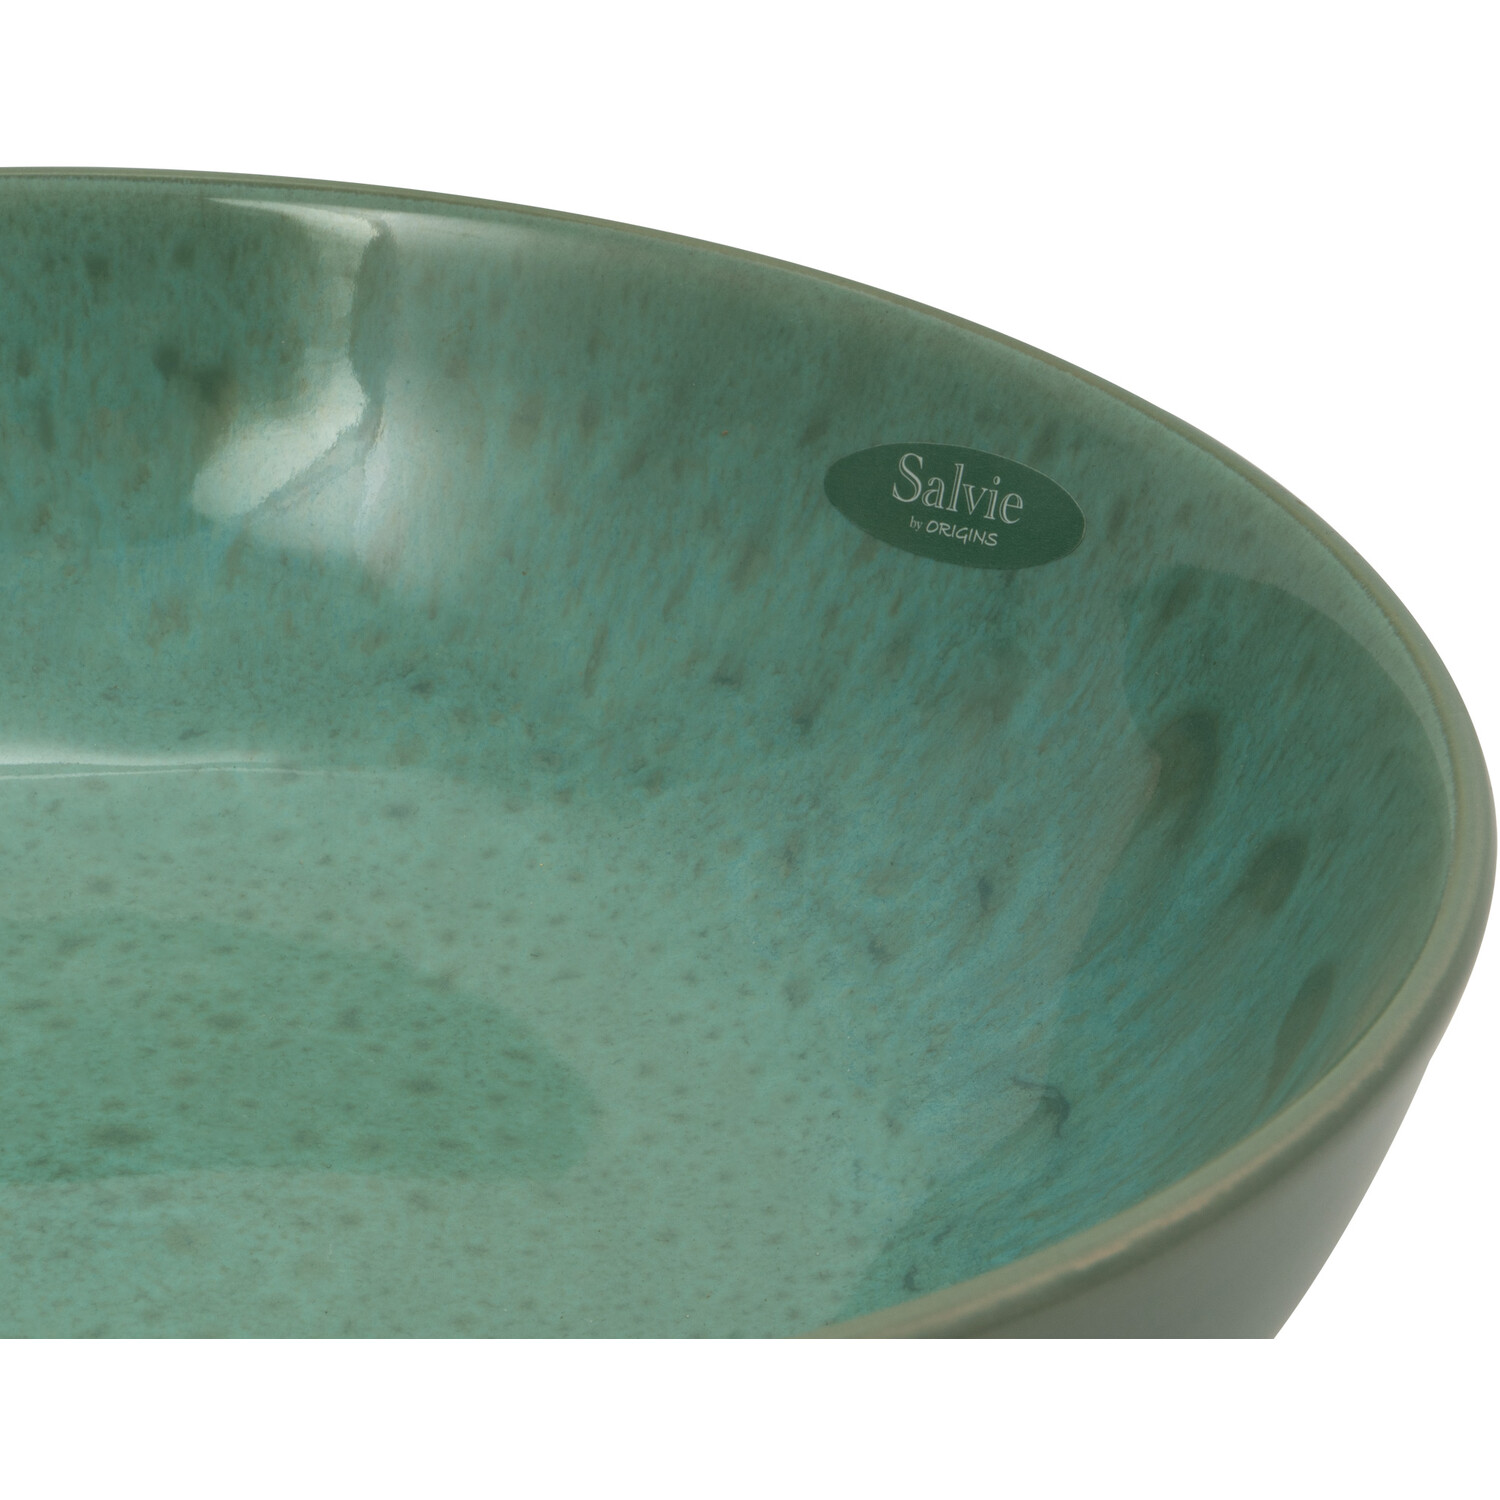 Salvie Reactive Glaze Serving Bowl - Green Image 3